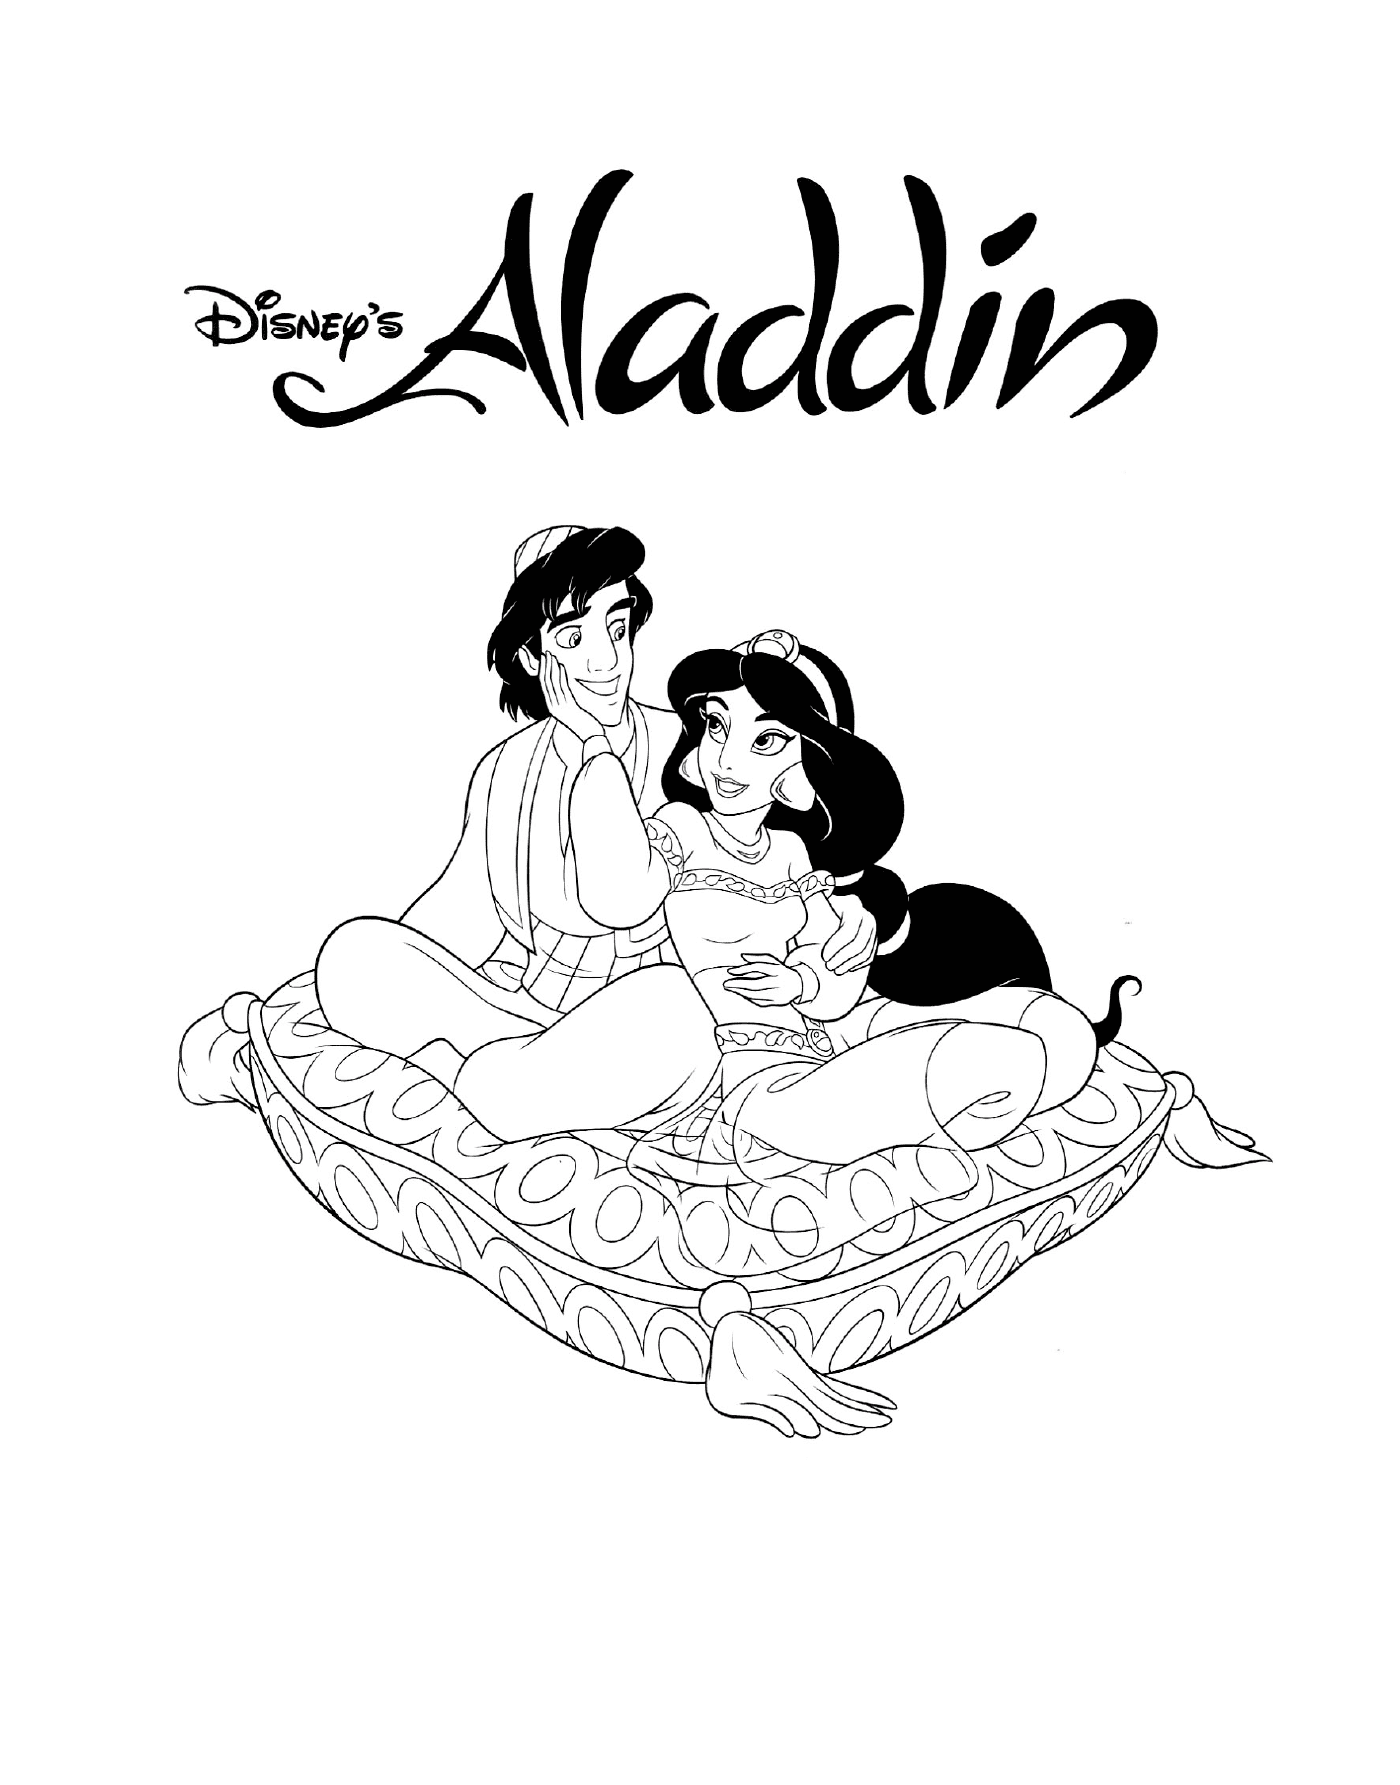  Aladino y Jasmine 